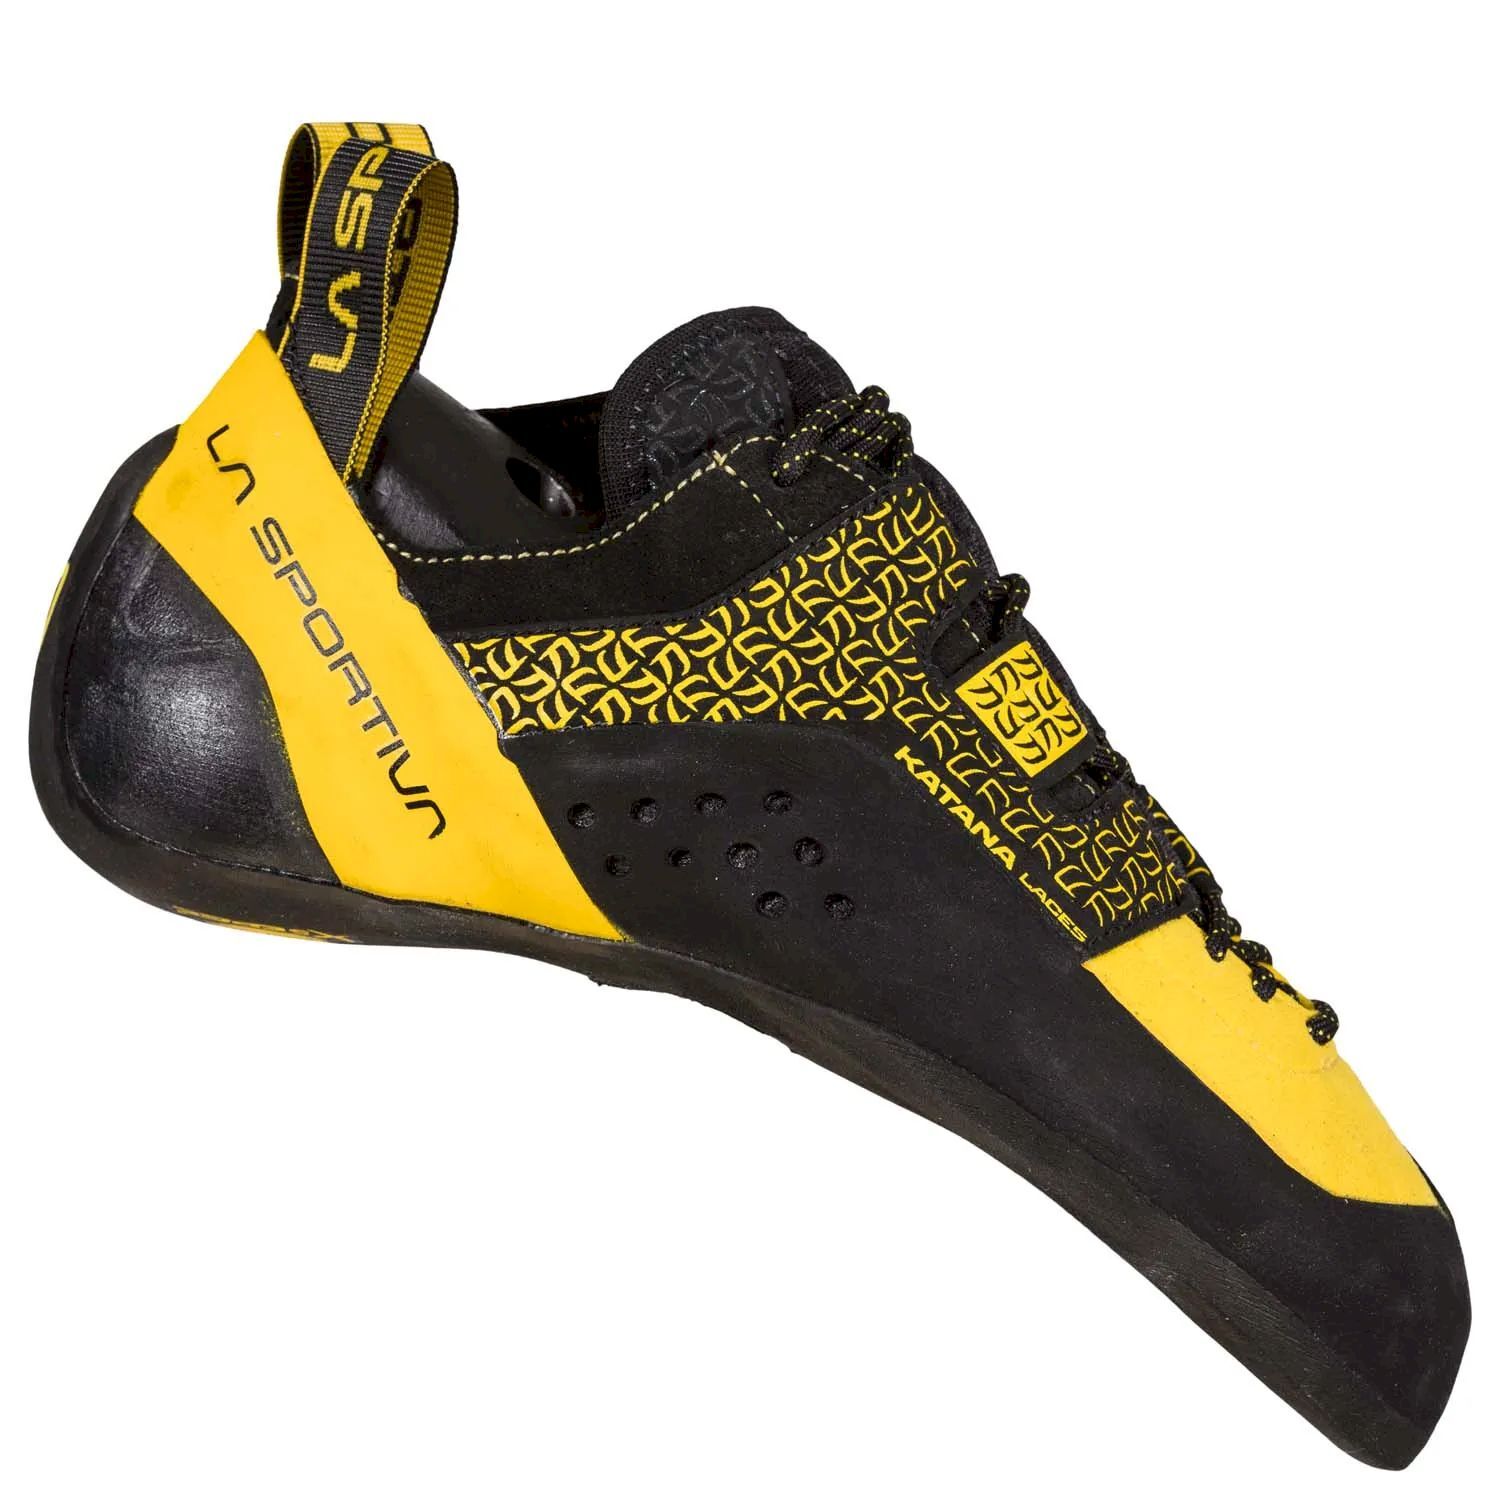 La Sportiva Katana Laces - Climbing shoes - Men's